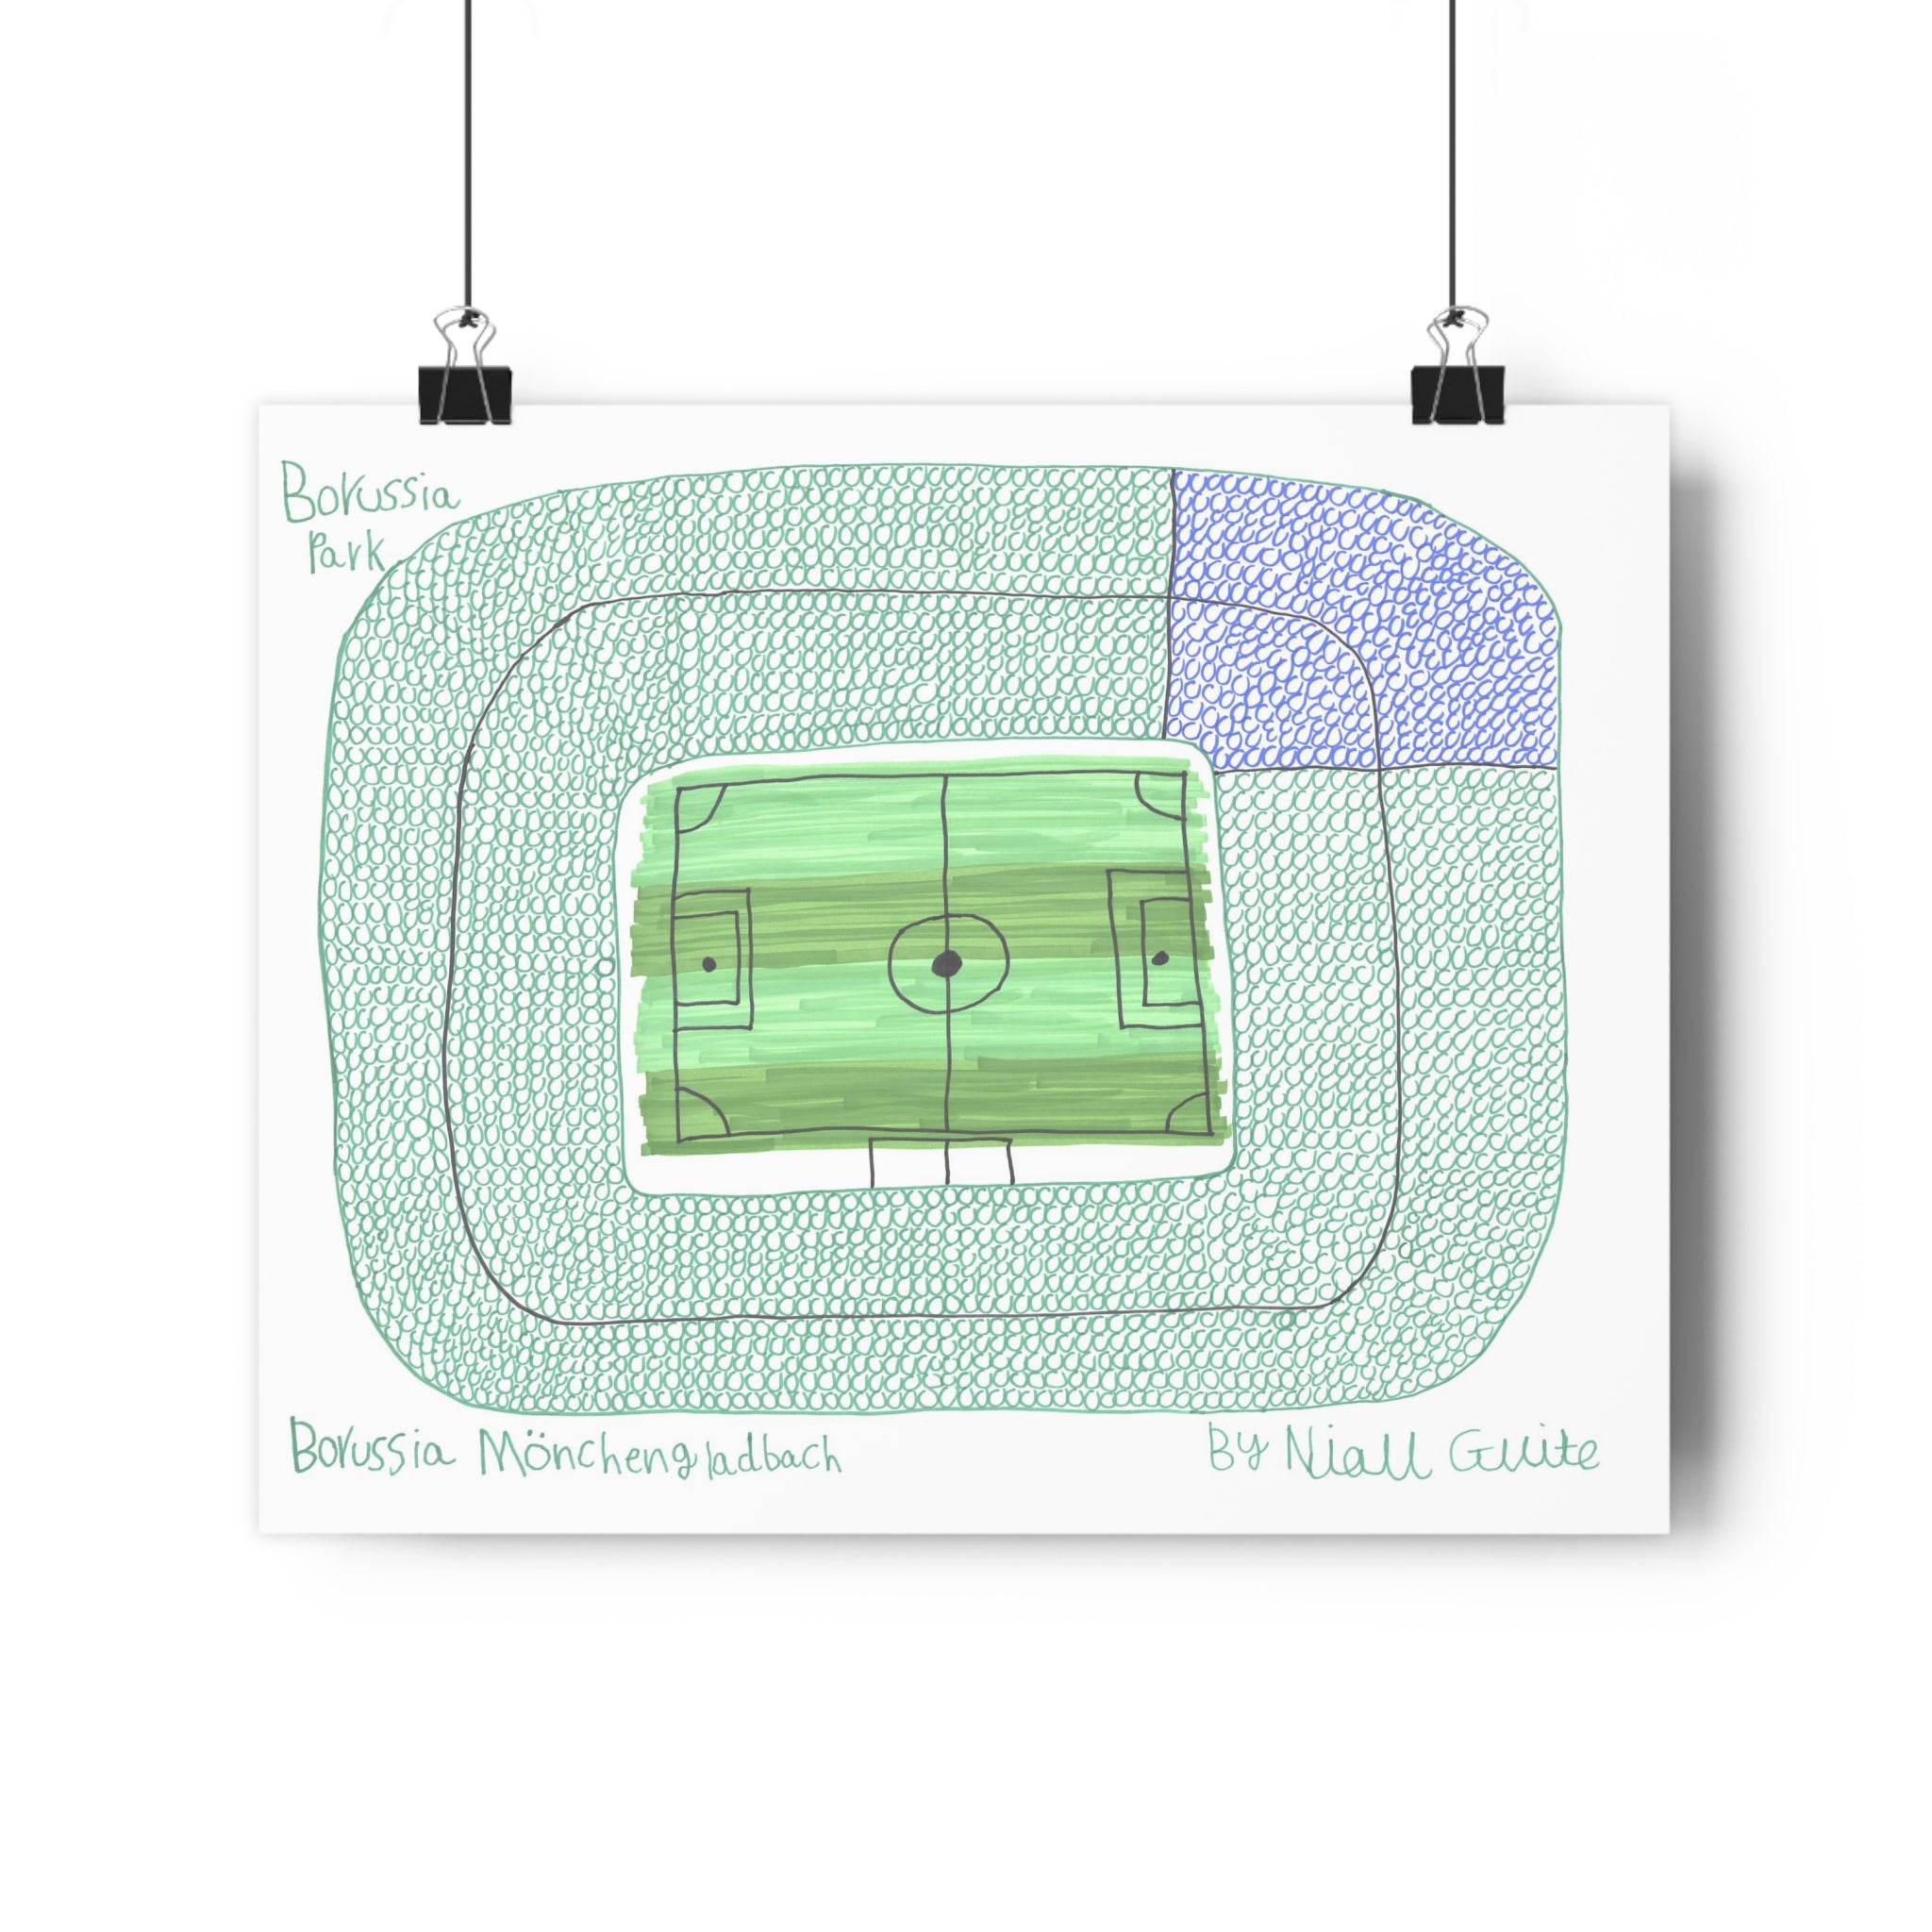 Borussia Mönchengladbach - Borussia Park - Print